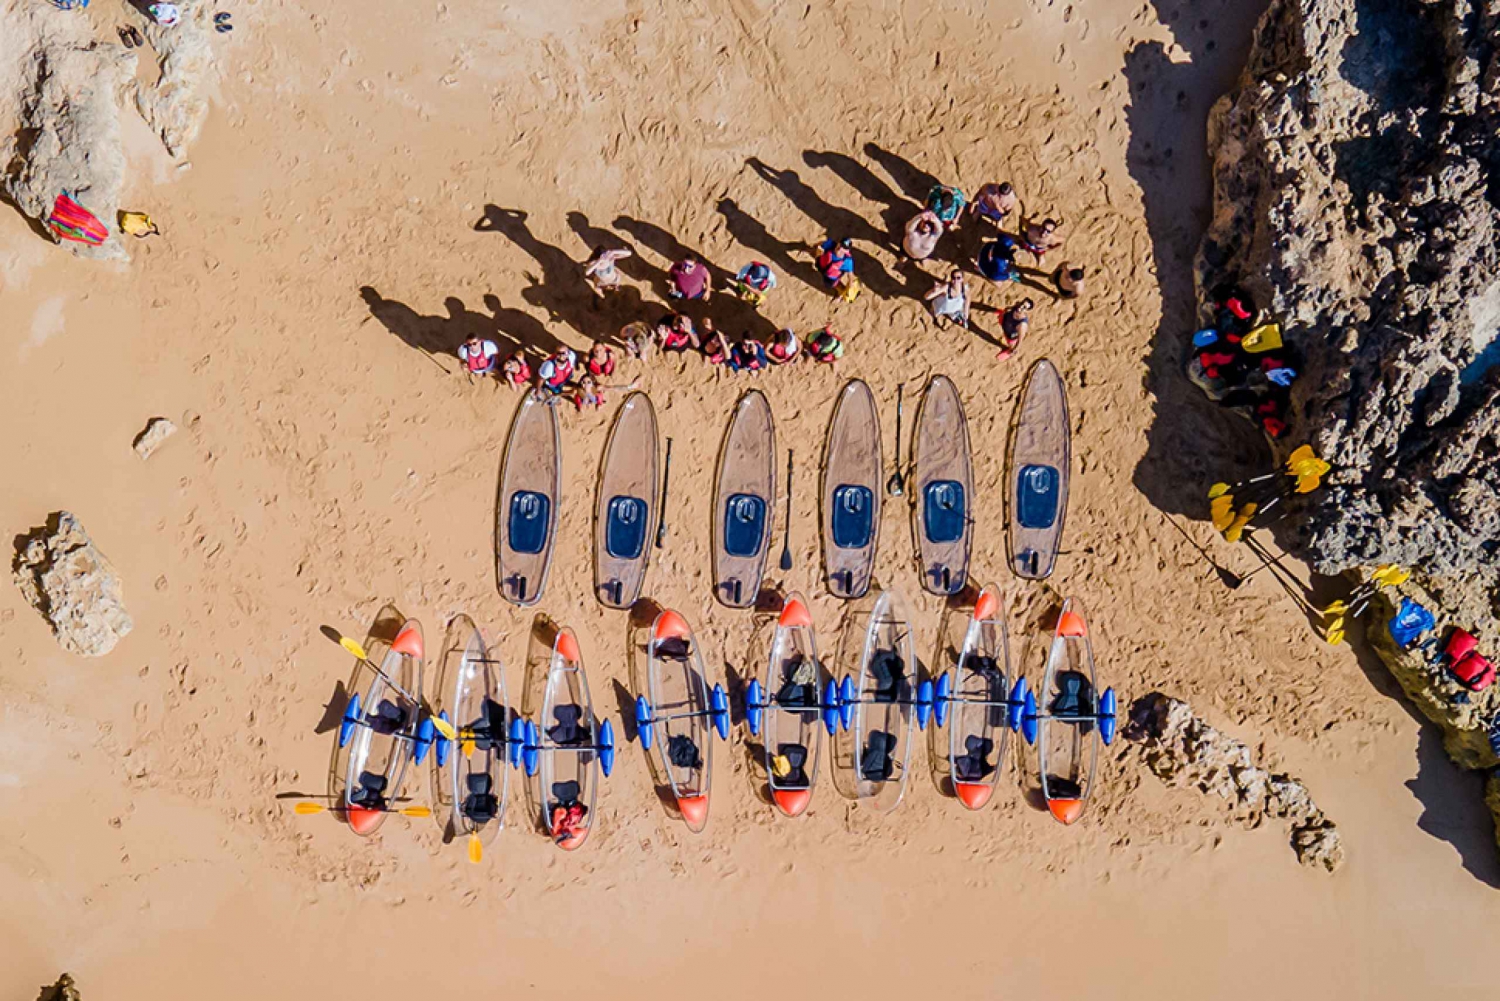 100% Clear Kayak Tour from Albandeira Beach